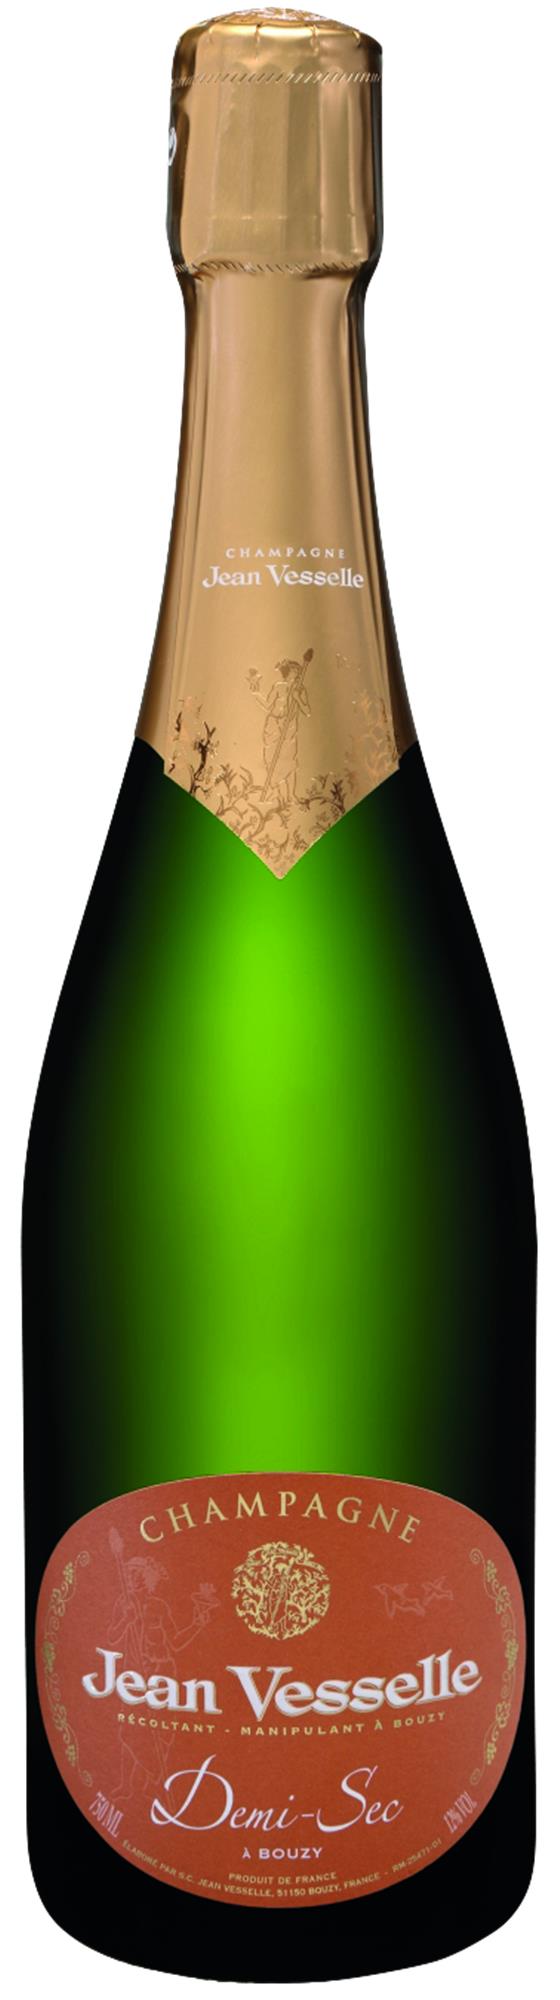 Jean Vesselle Champagne Demi-Sec Bouzy